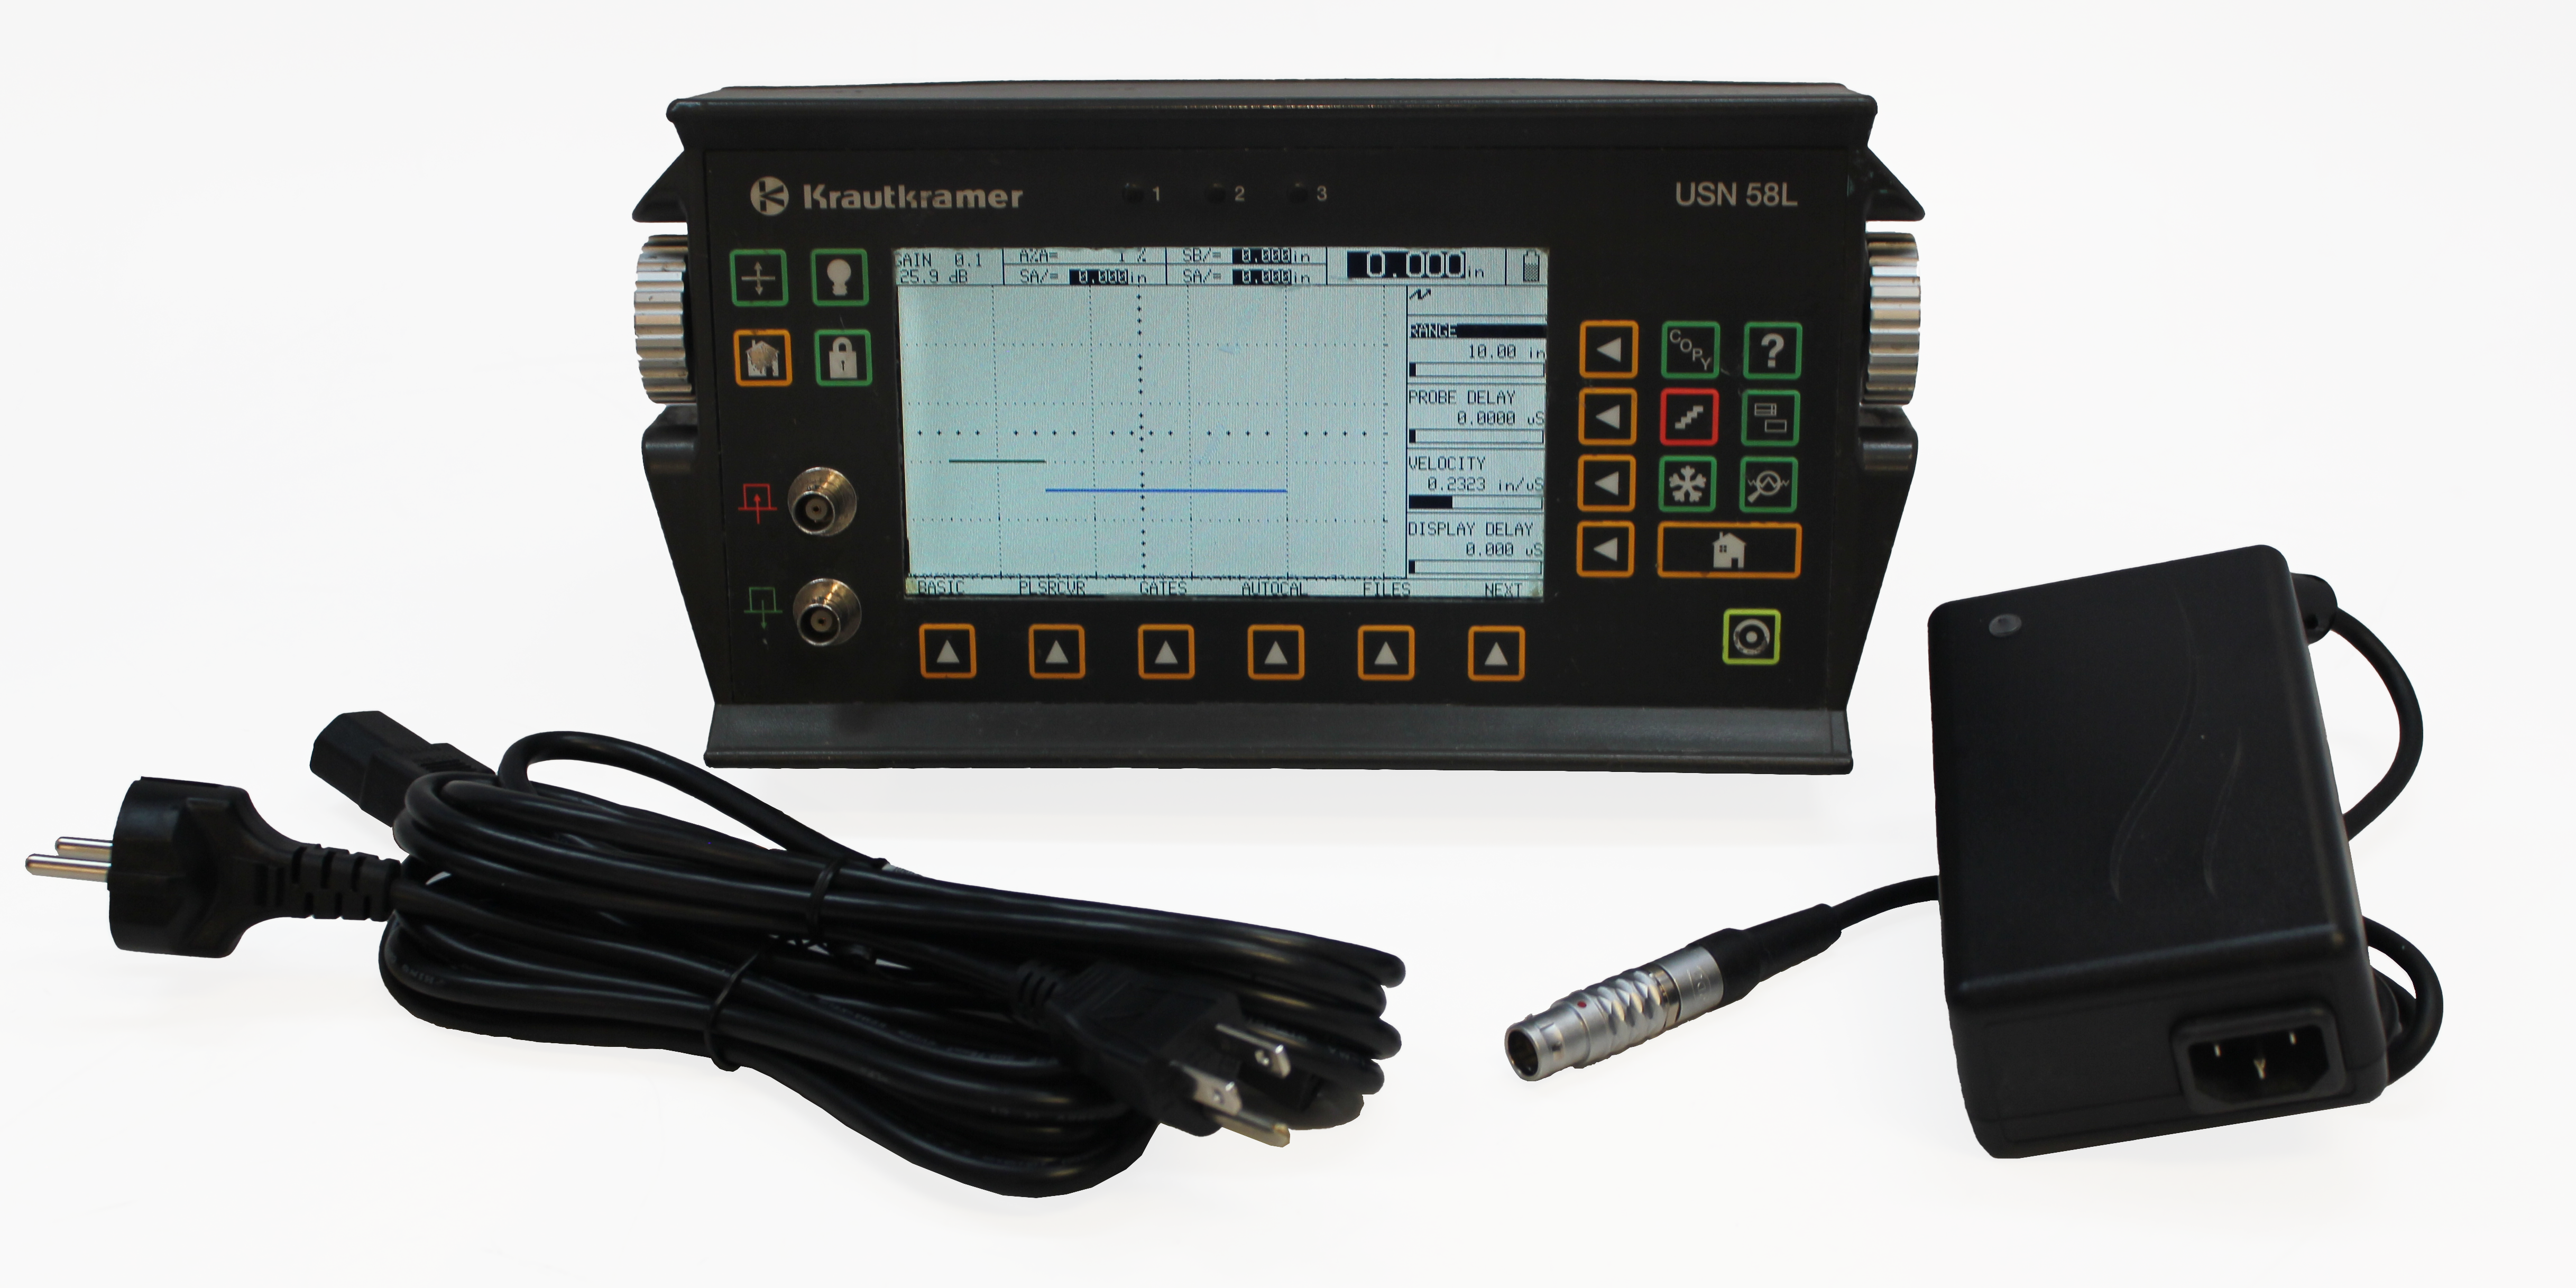 USN58L Krautkramer Ultrasonic Flaw Detector